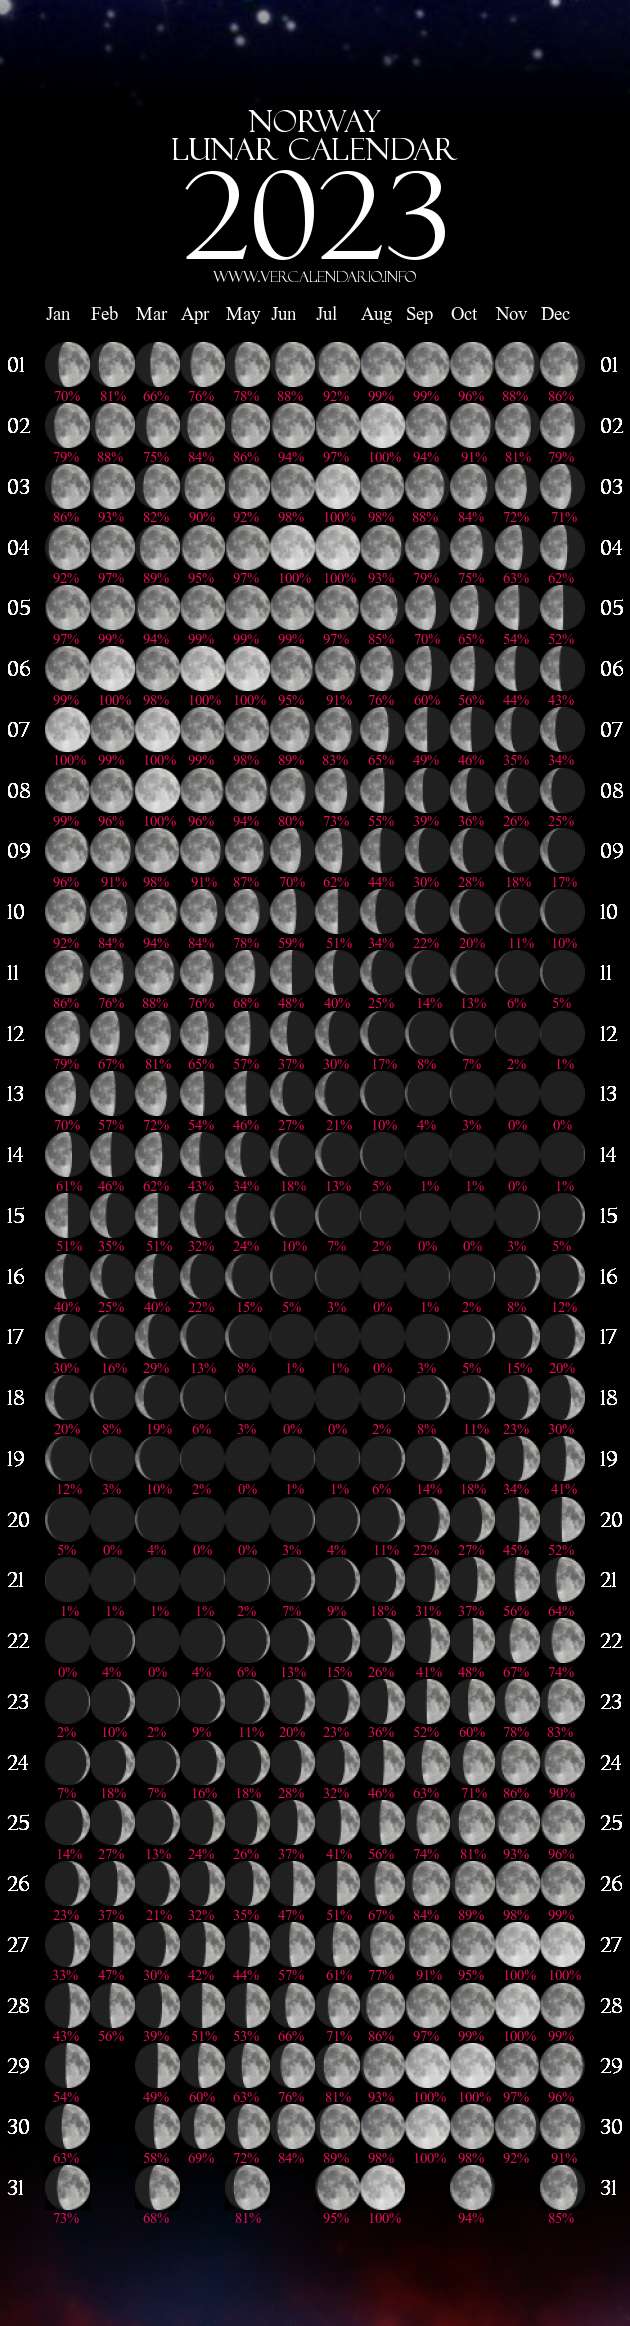 Lunar Calendar 2023 (Norway)